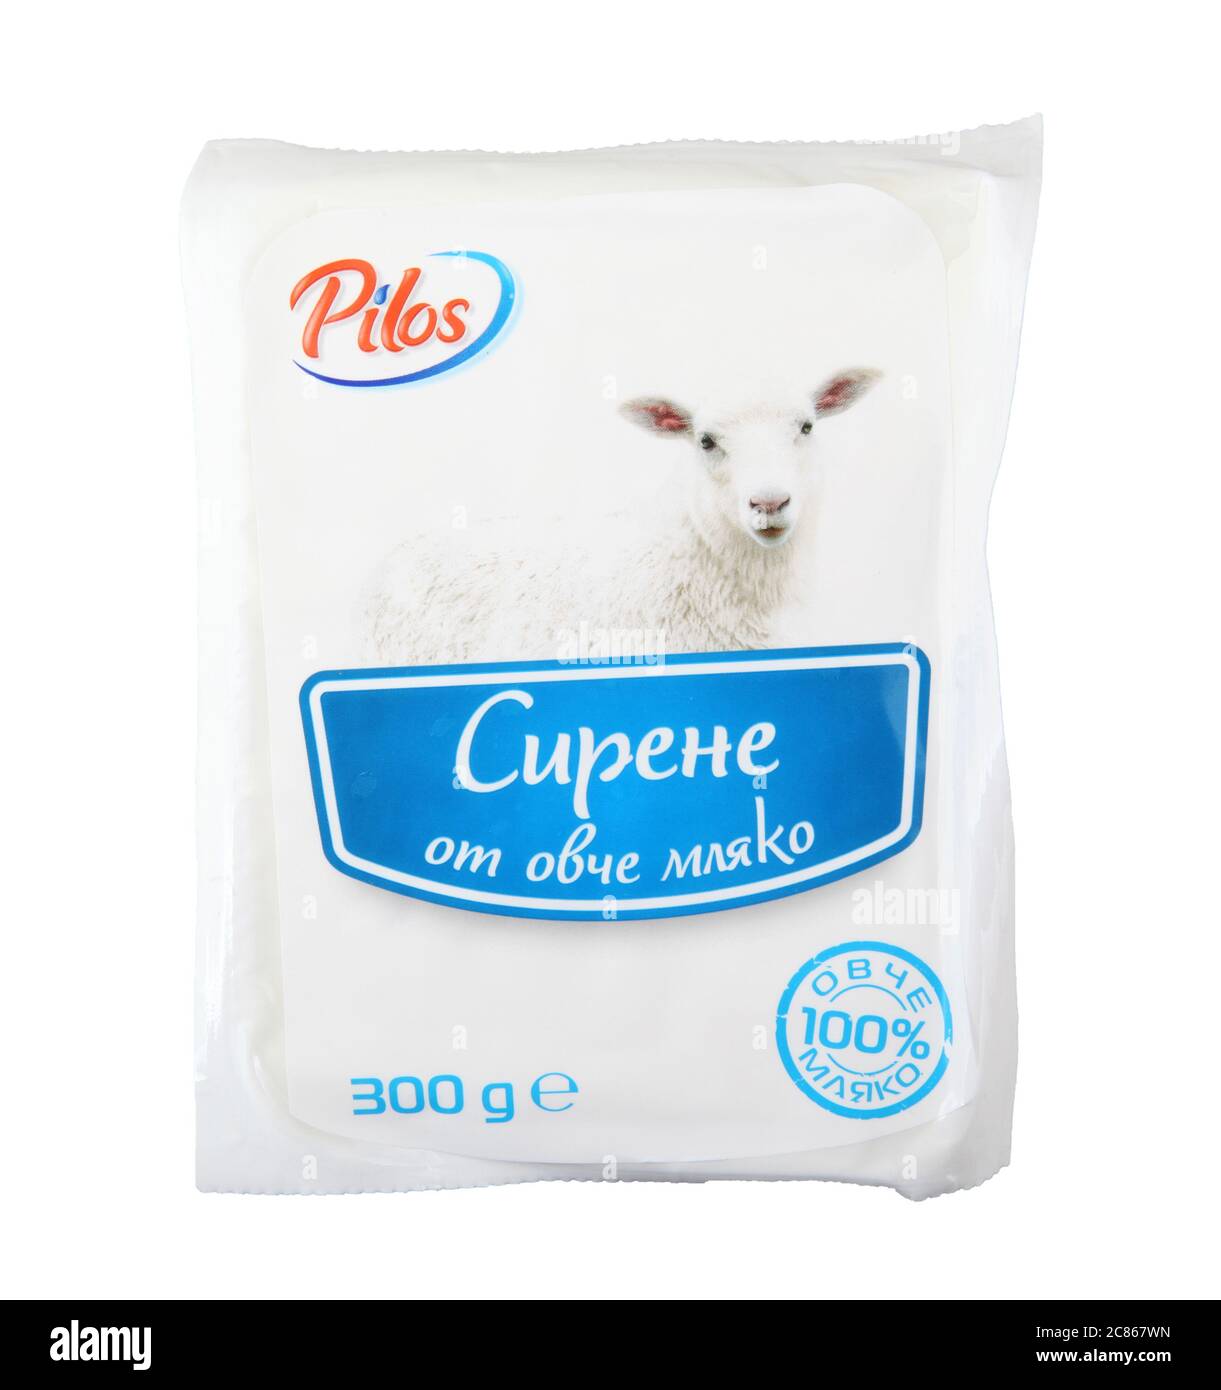 Pomorie, Bulgaria - 20 de julio de 2020: Queso de leche de oveja pilos. El queso de leche de oveja es un queso preparado a partir de la leche de oveja Foto de stock